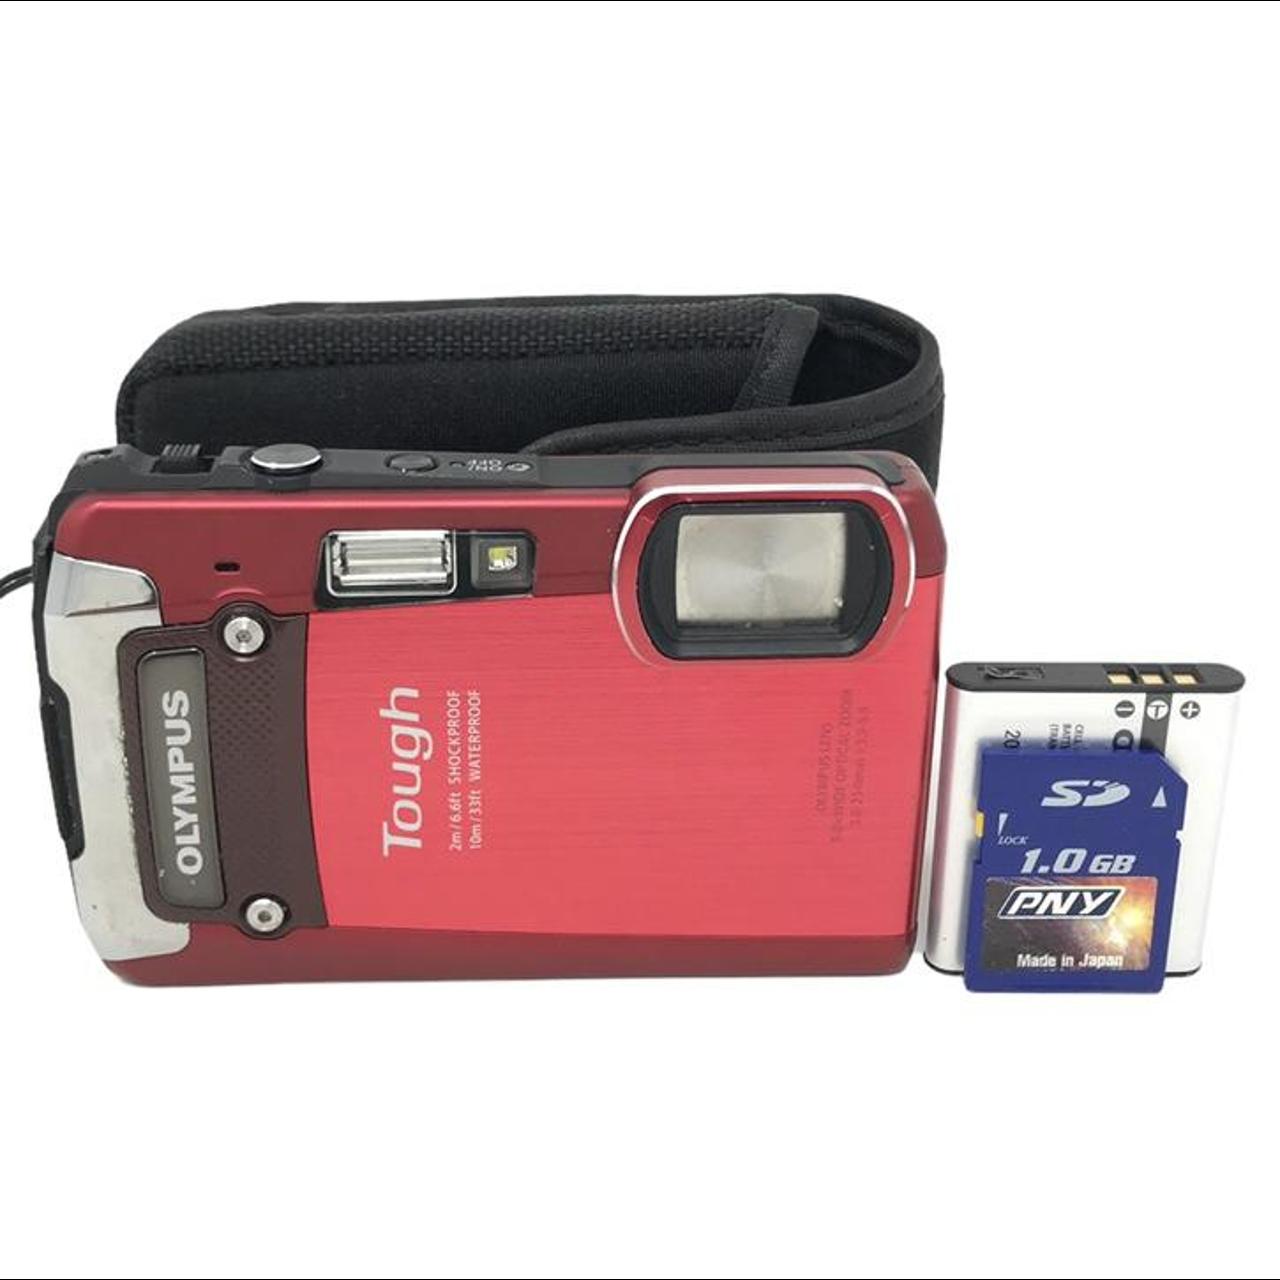 Product Image 1 - Olympus TG-820 Tough Digital Camera

Comes